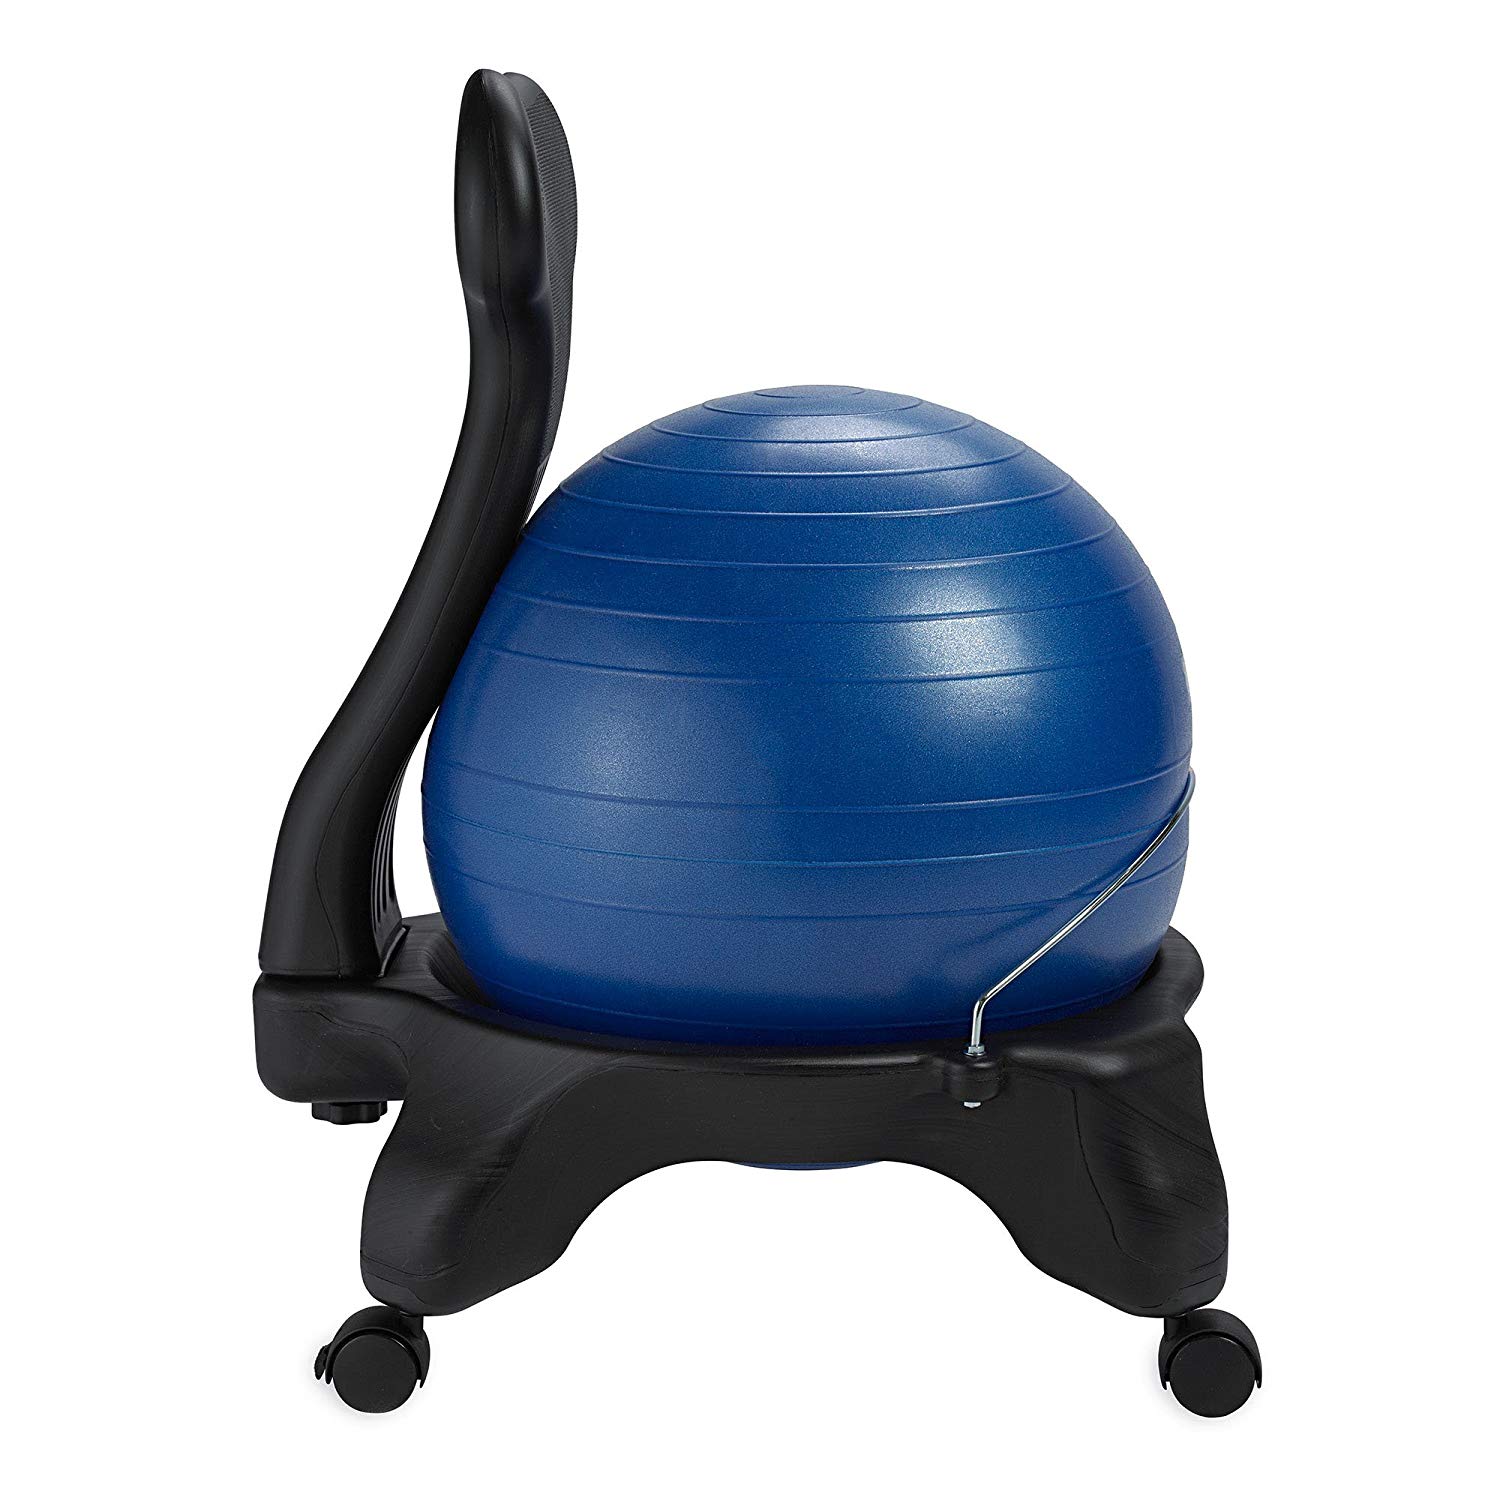 Gaiam Classic Gym Yoga Exercise Balance Ball Office Desk Chair, Blue (2